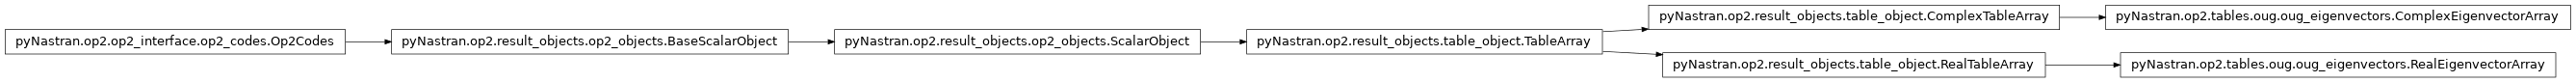 Inheritance diagram of pyNastran.op2.tables.oug.oug_eigenvectors